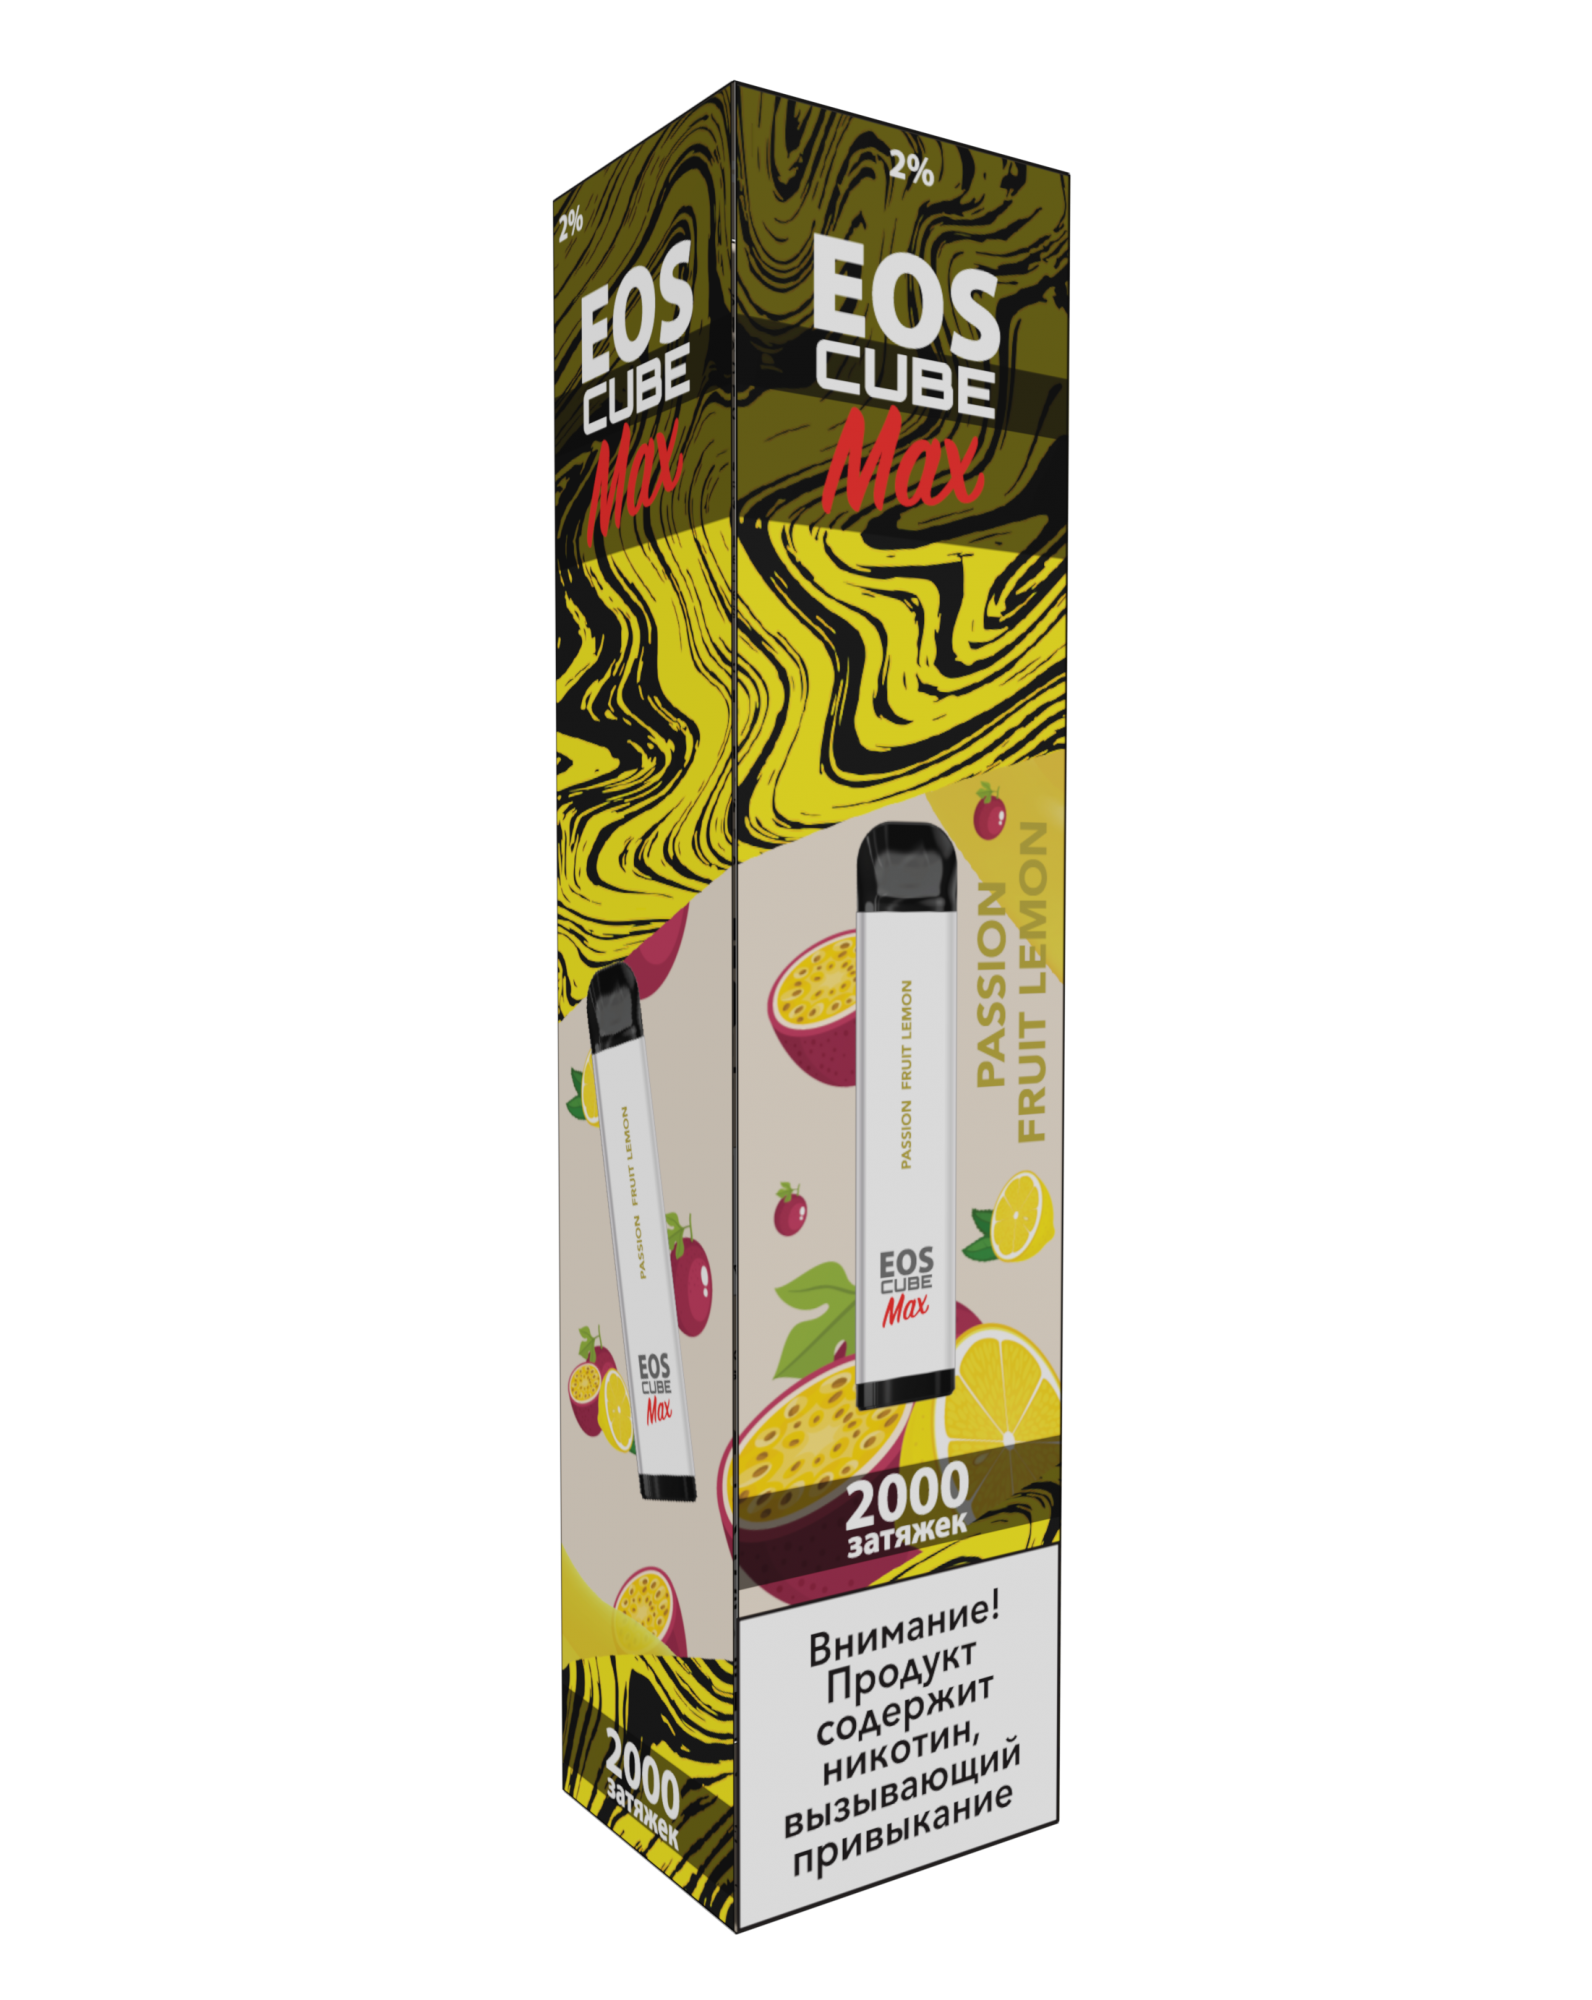 Cube max. EOS Cube Max. Электронные сигареты EOS Cube Max. Электронная сигарета passion Fruit Lemon. Одноразки EOS Cube.